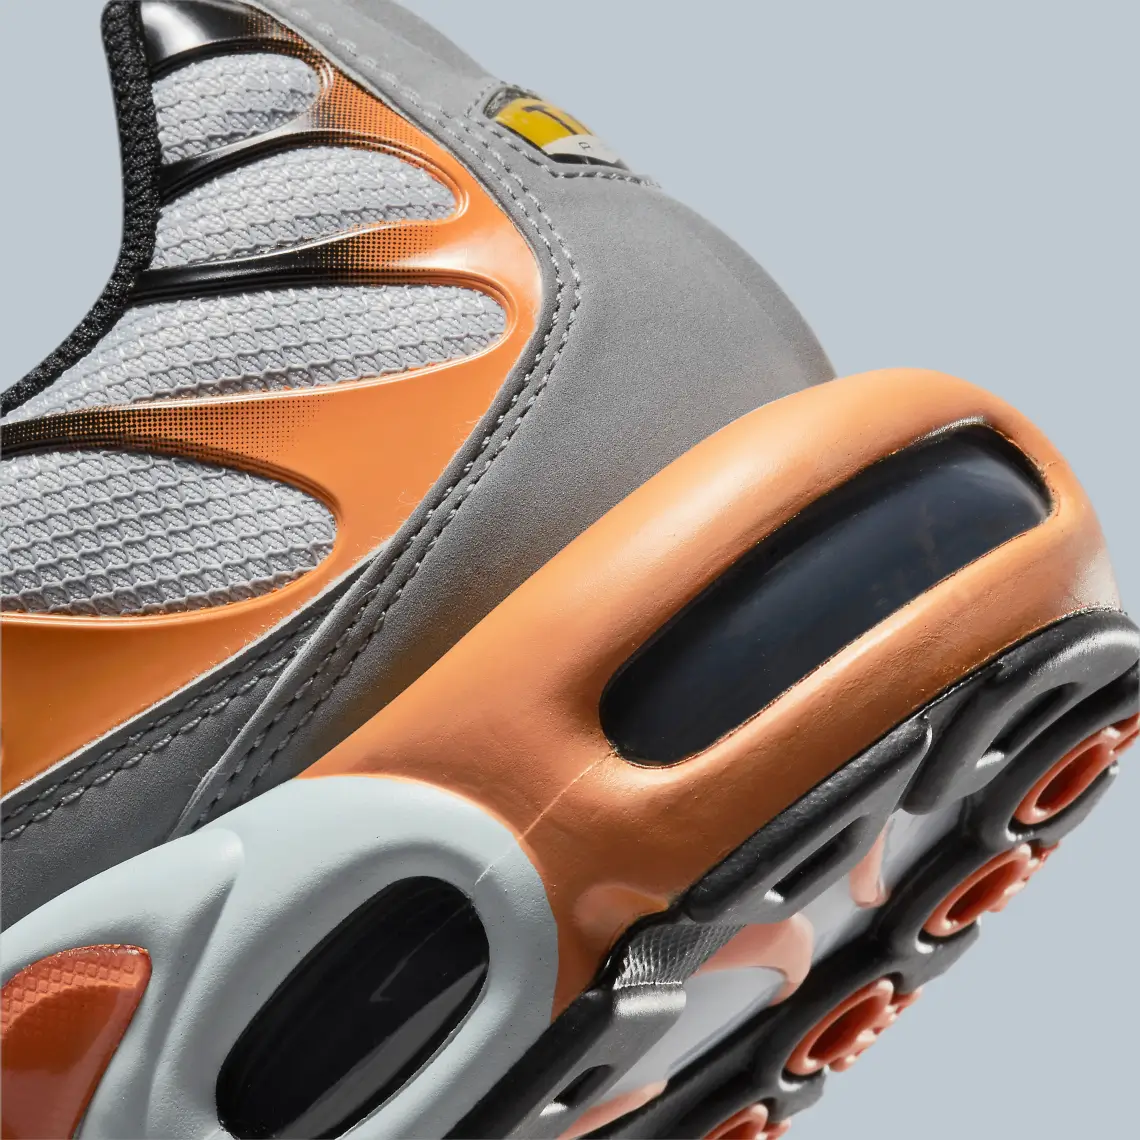 Nike TN Air Max Plus Upcoming in Orange and Grey 